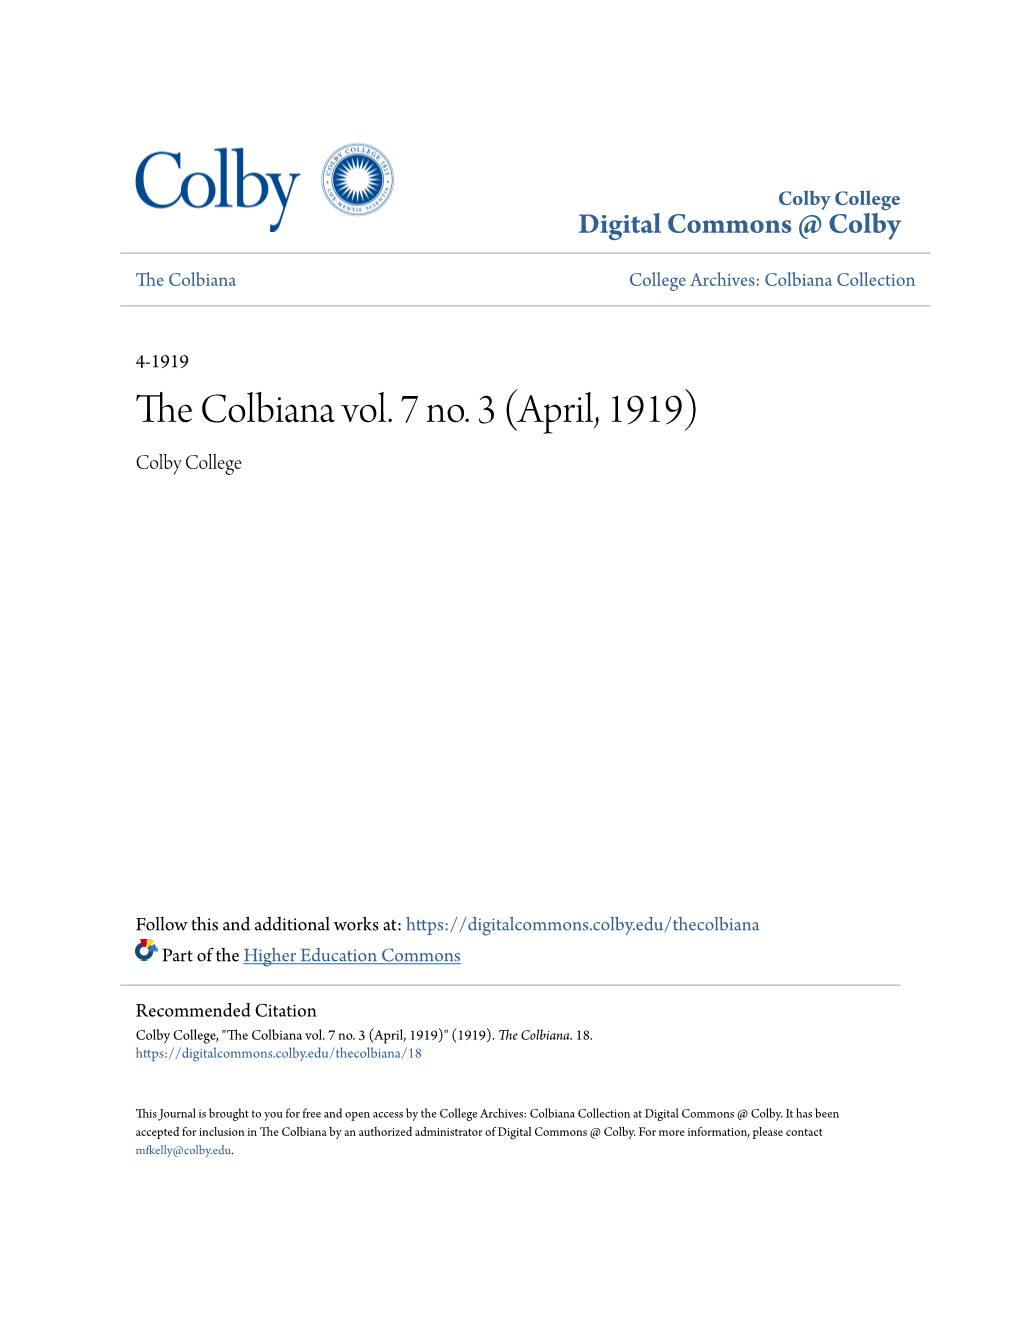 The Colbiana Vol. 7 No. 3